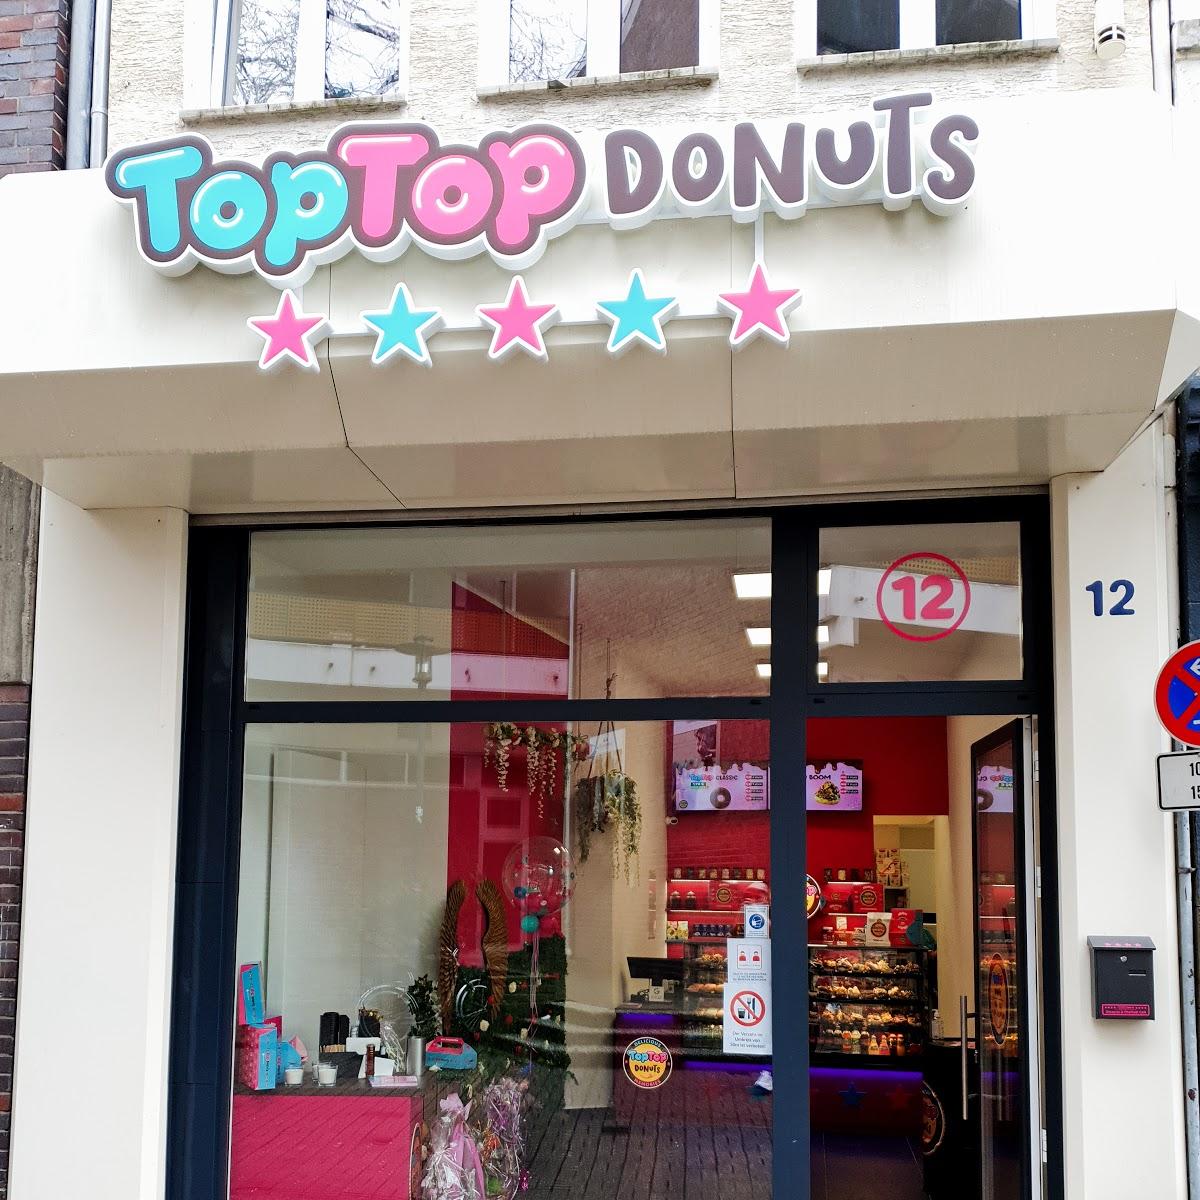 Restaurant "Top Top Donuts Krefeld" in Krefeld